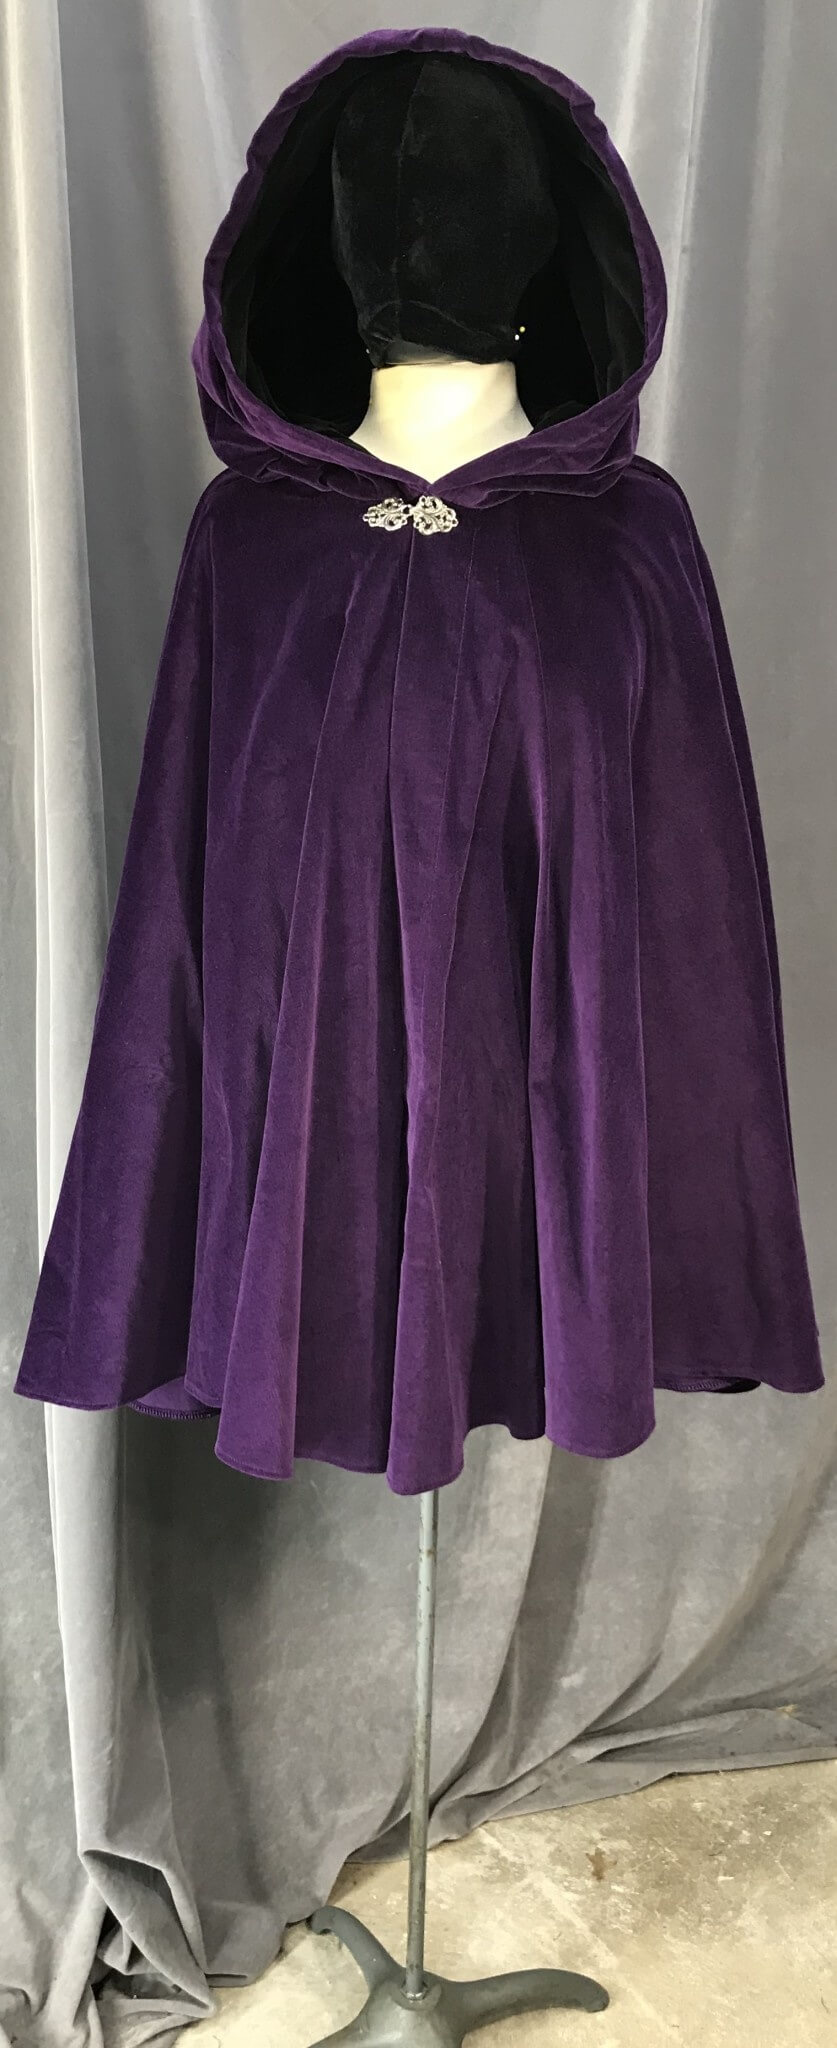 Medieval Hooded Velvet Cloak in Purple or Teal with Pockets